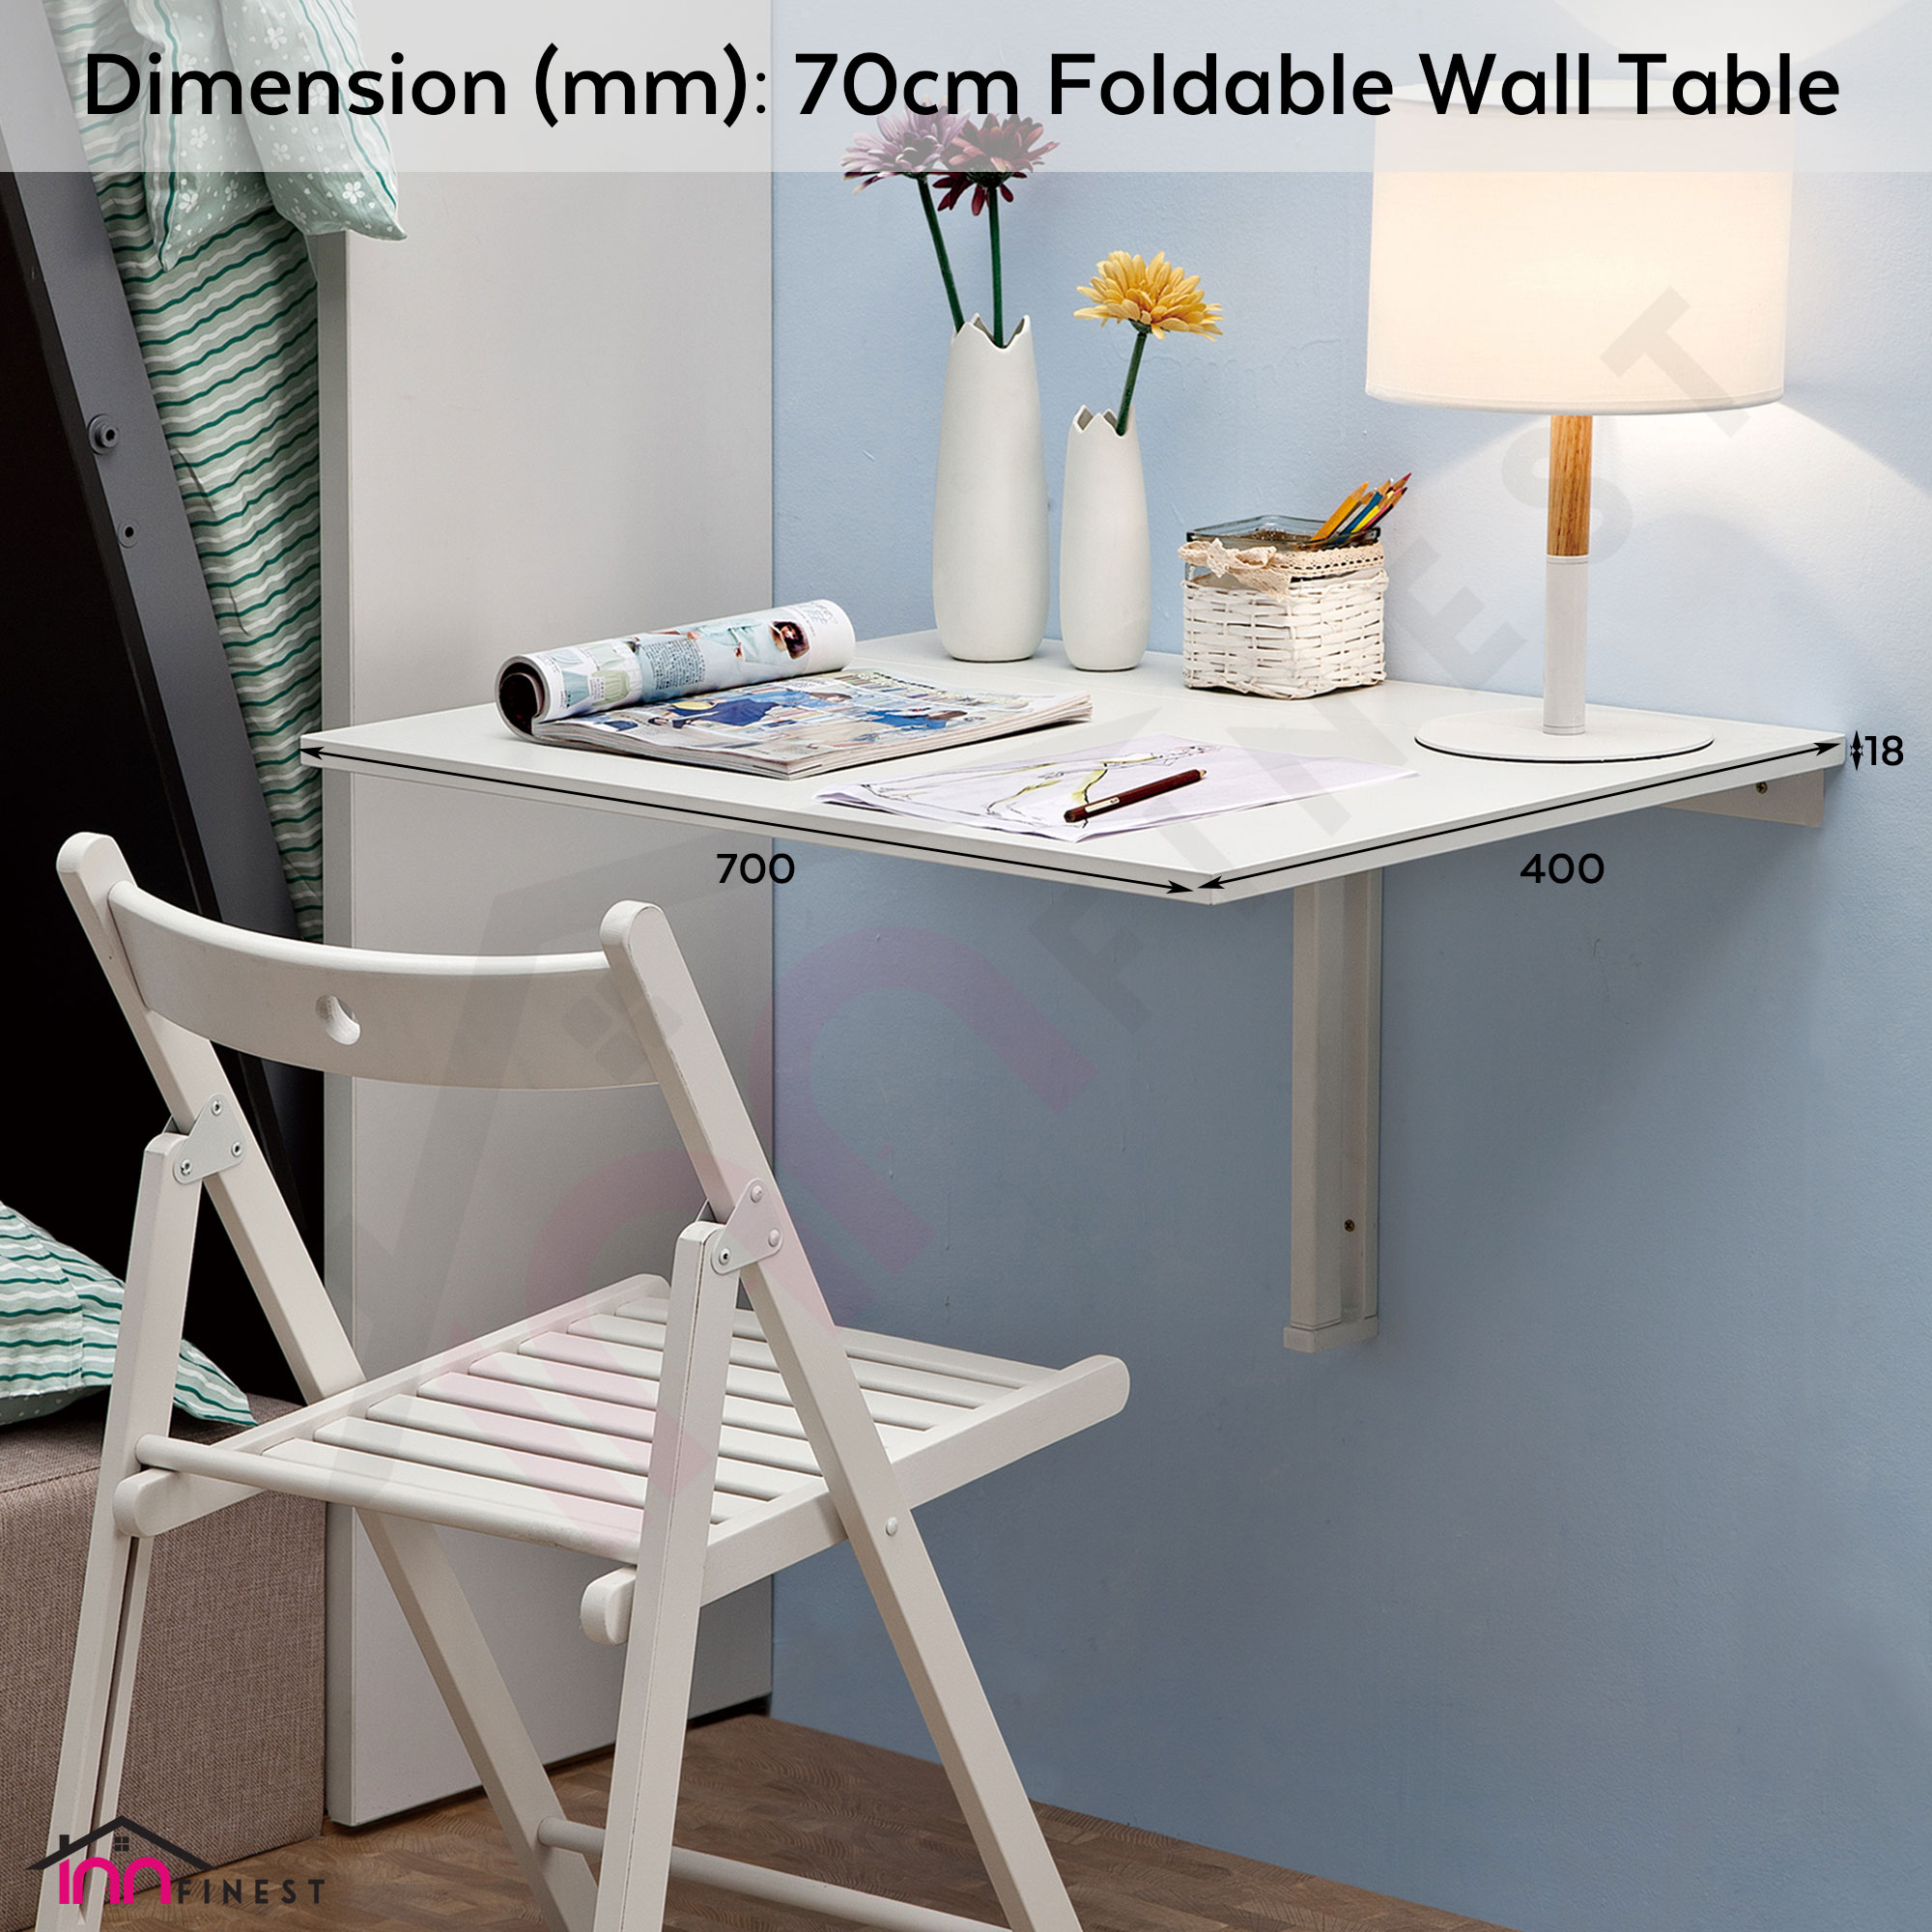 70cm foldable wall table space saving